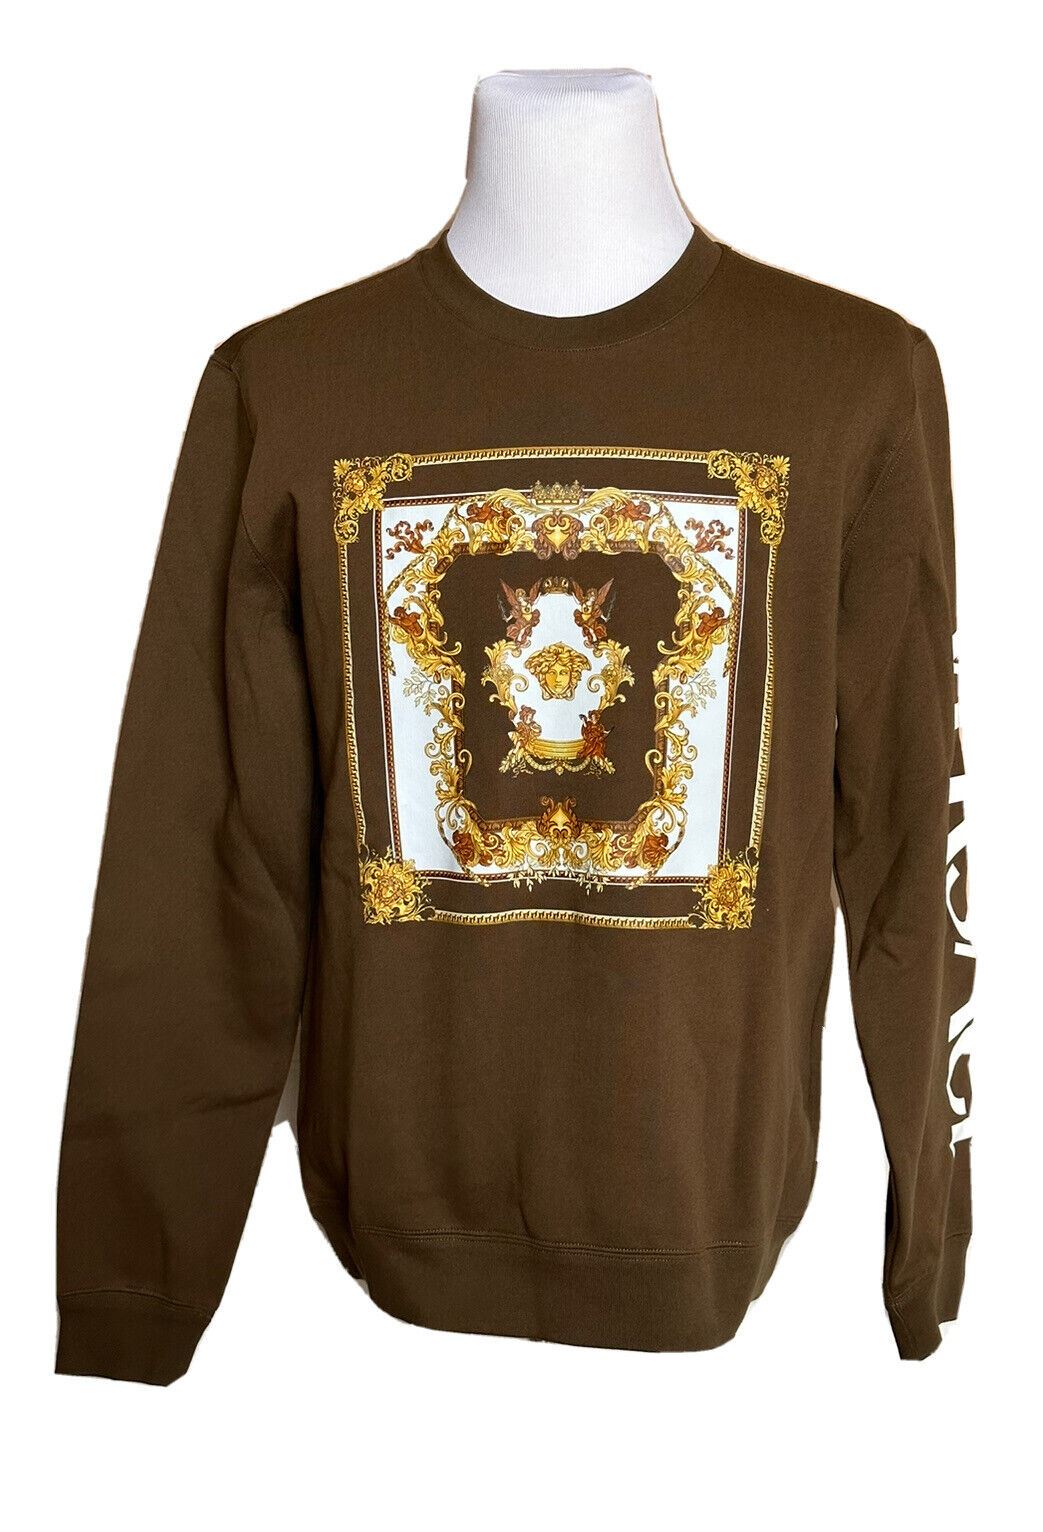 Neu mit Etikett: 850 $ Versace Medusa Renaissance Khaki Baumwoll-Sweatshirt XL 1008282 